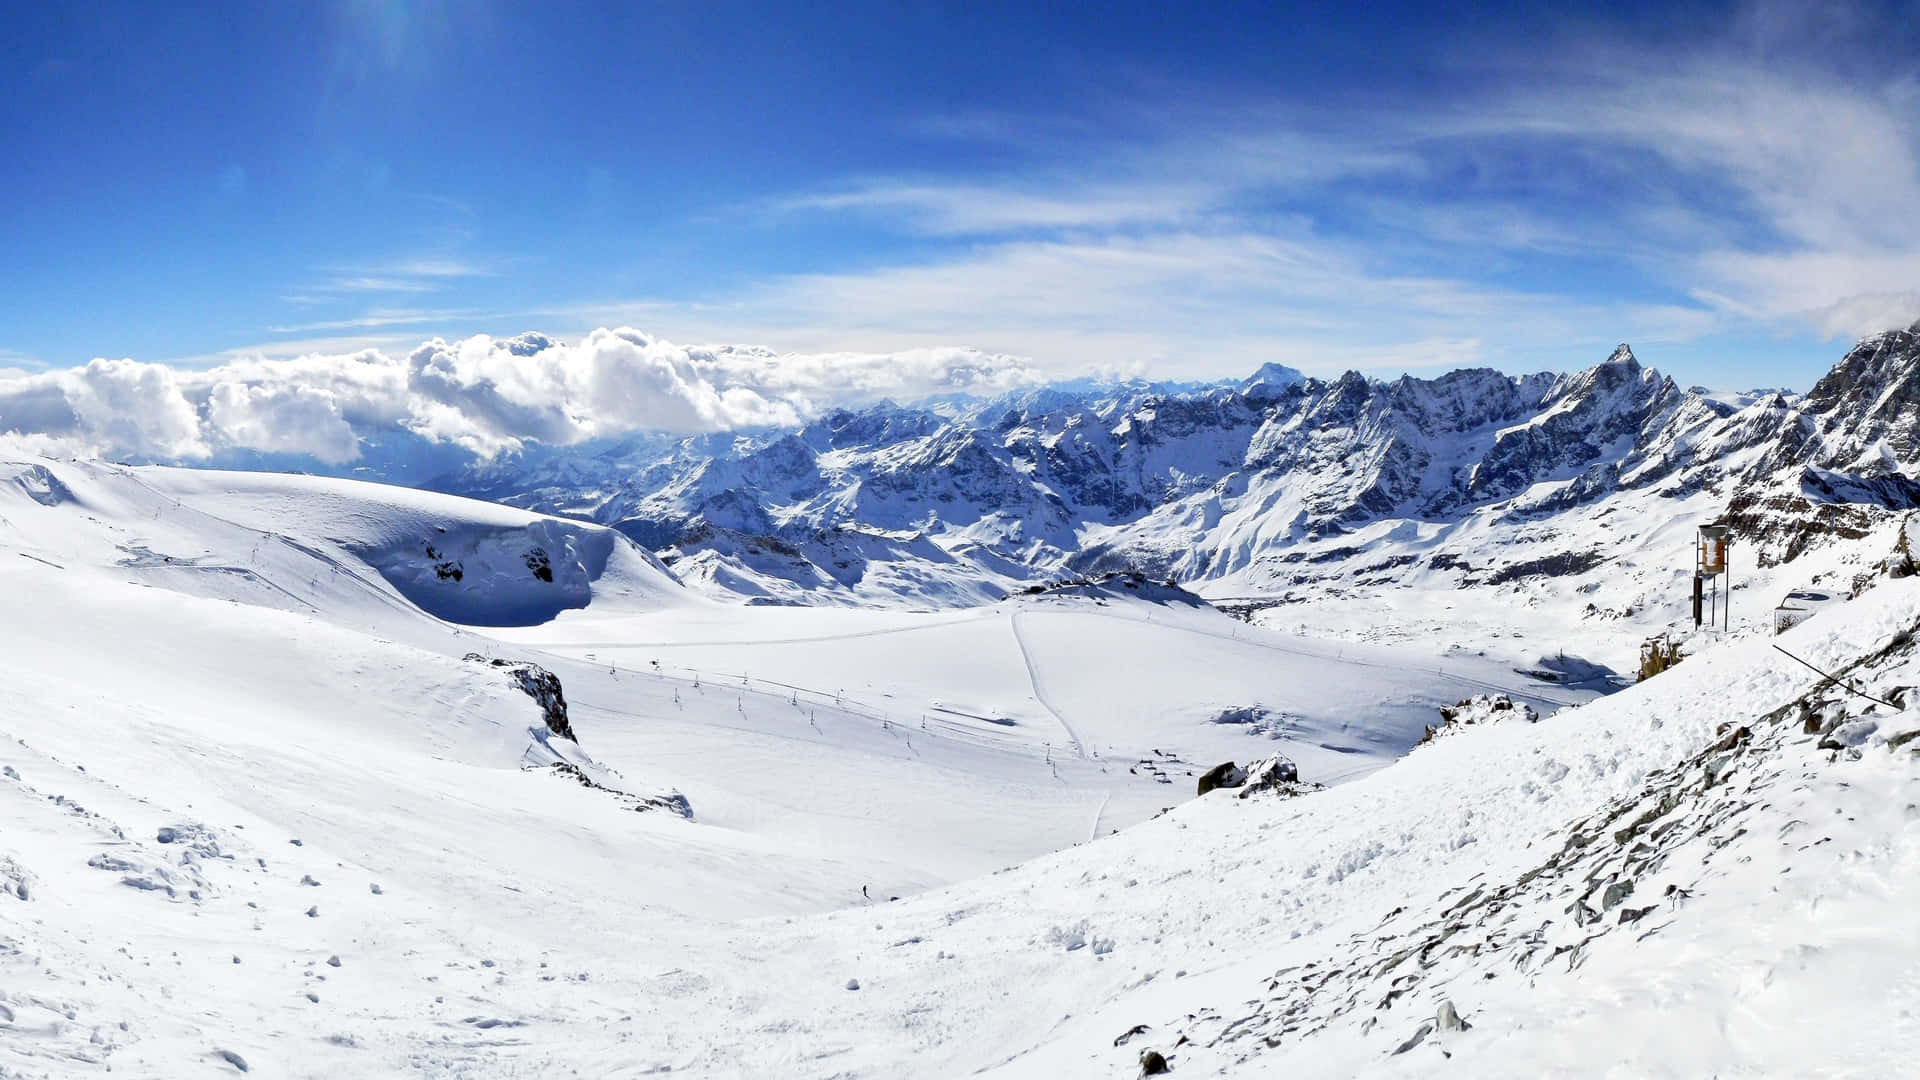 Enjoy the powdery snow and majestic views of ski mountain! Wallpaper